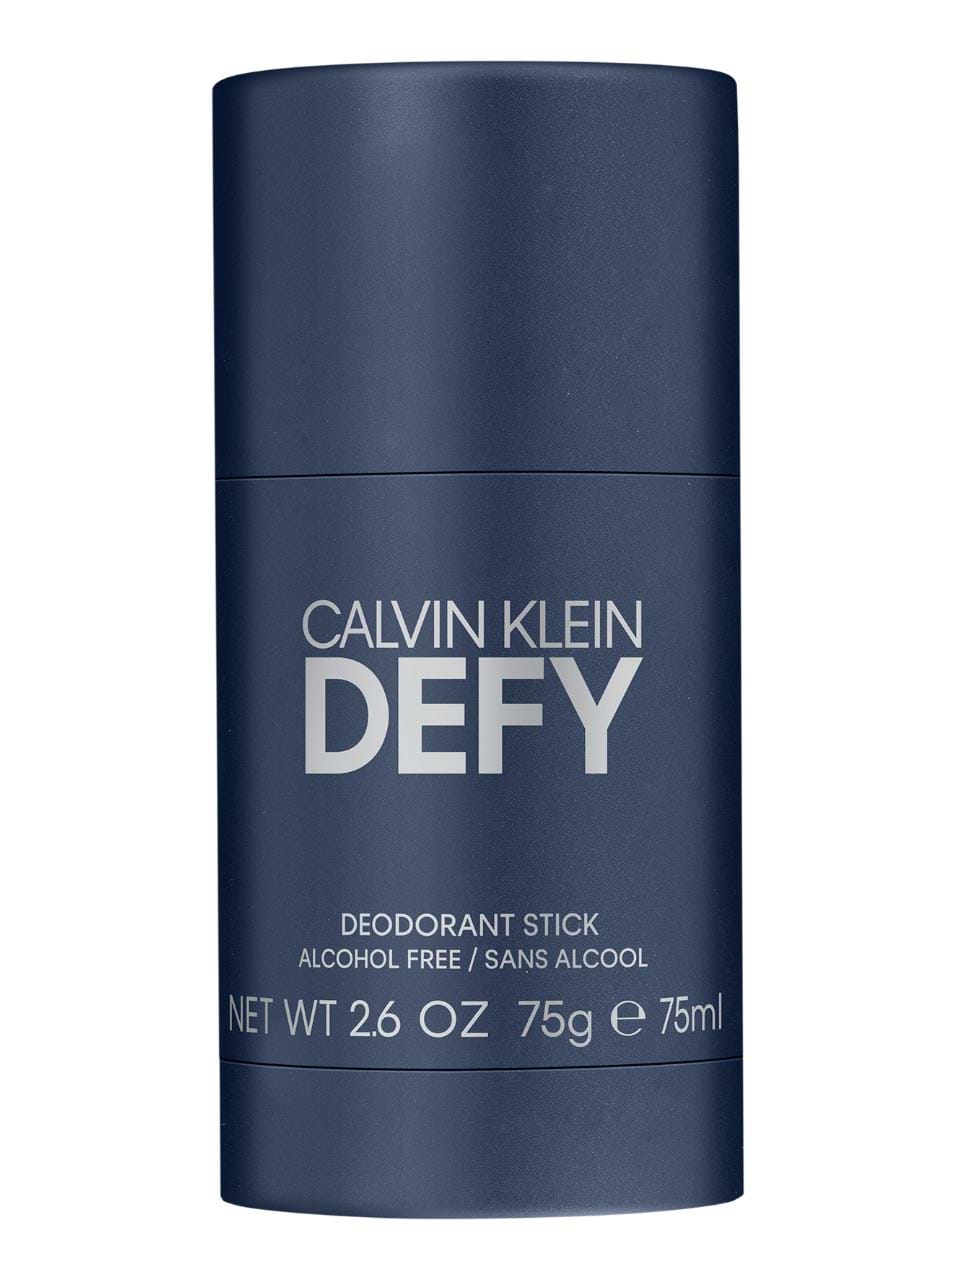 Tung lastbil Beskæftiget Tilsvarende Calvin Klein - deodorant og parfume - bestil Calvin Klein her